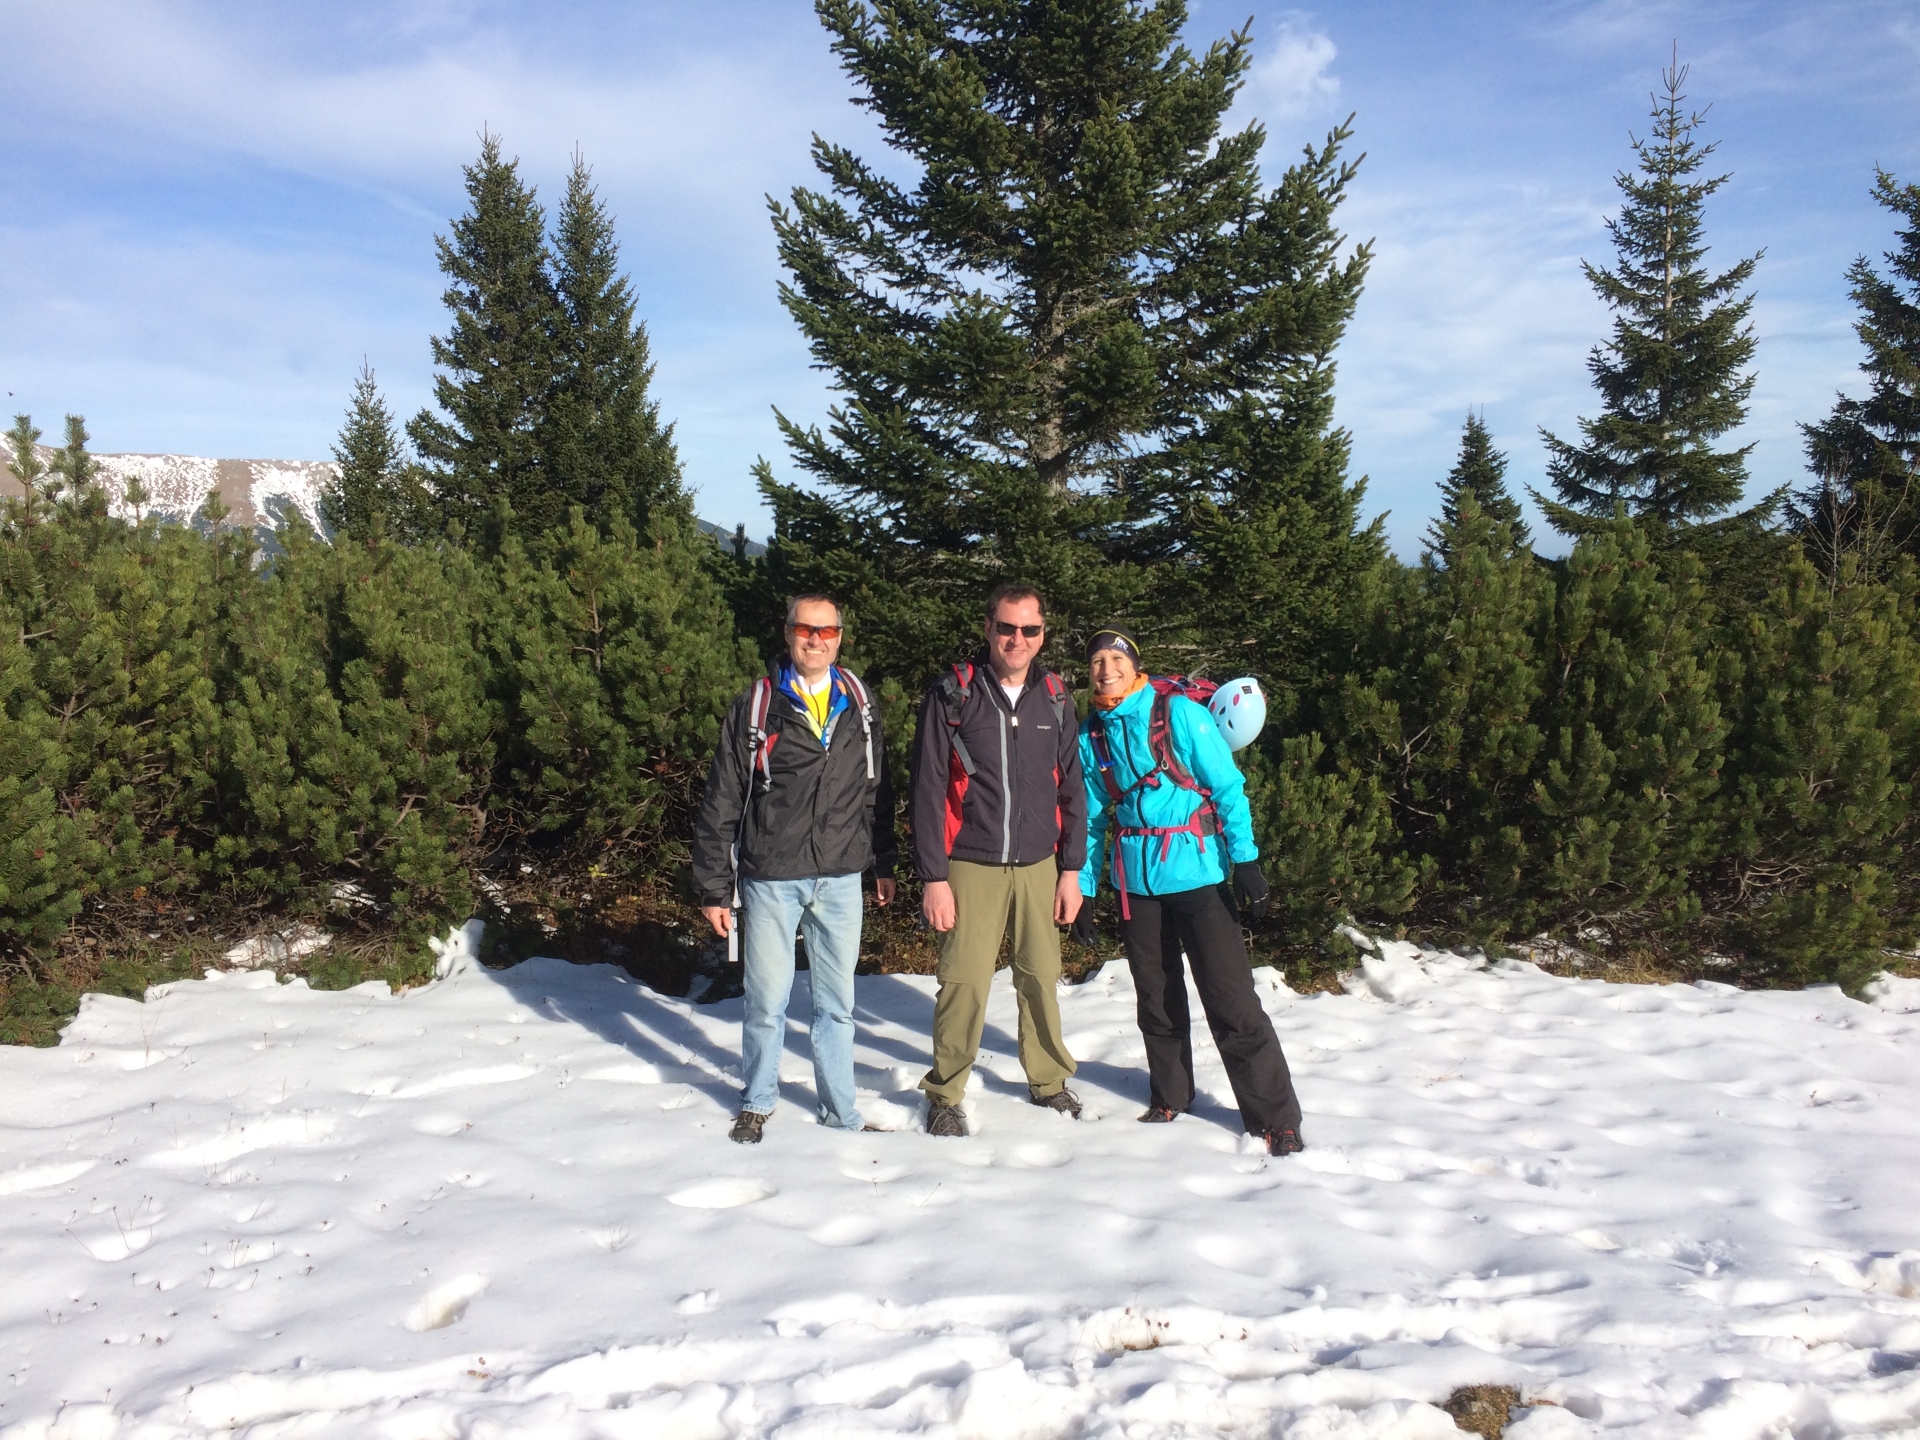 Herbert, Hannes and Nadja enjoying the snow